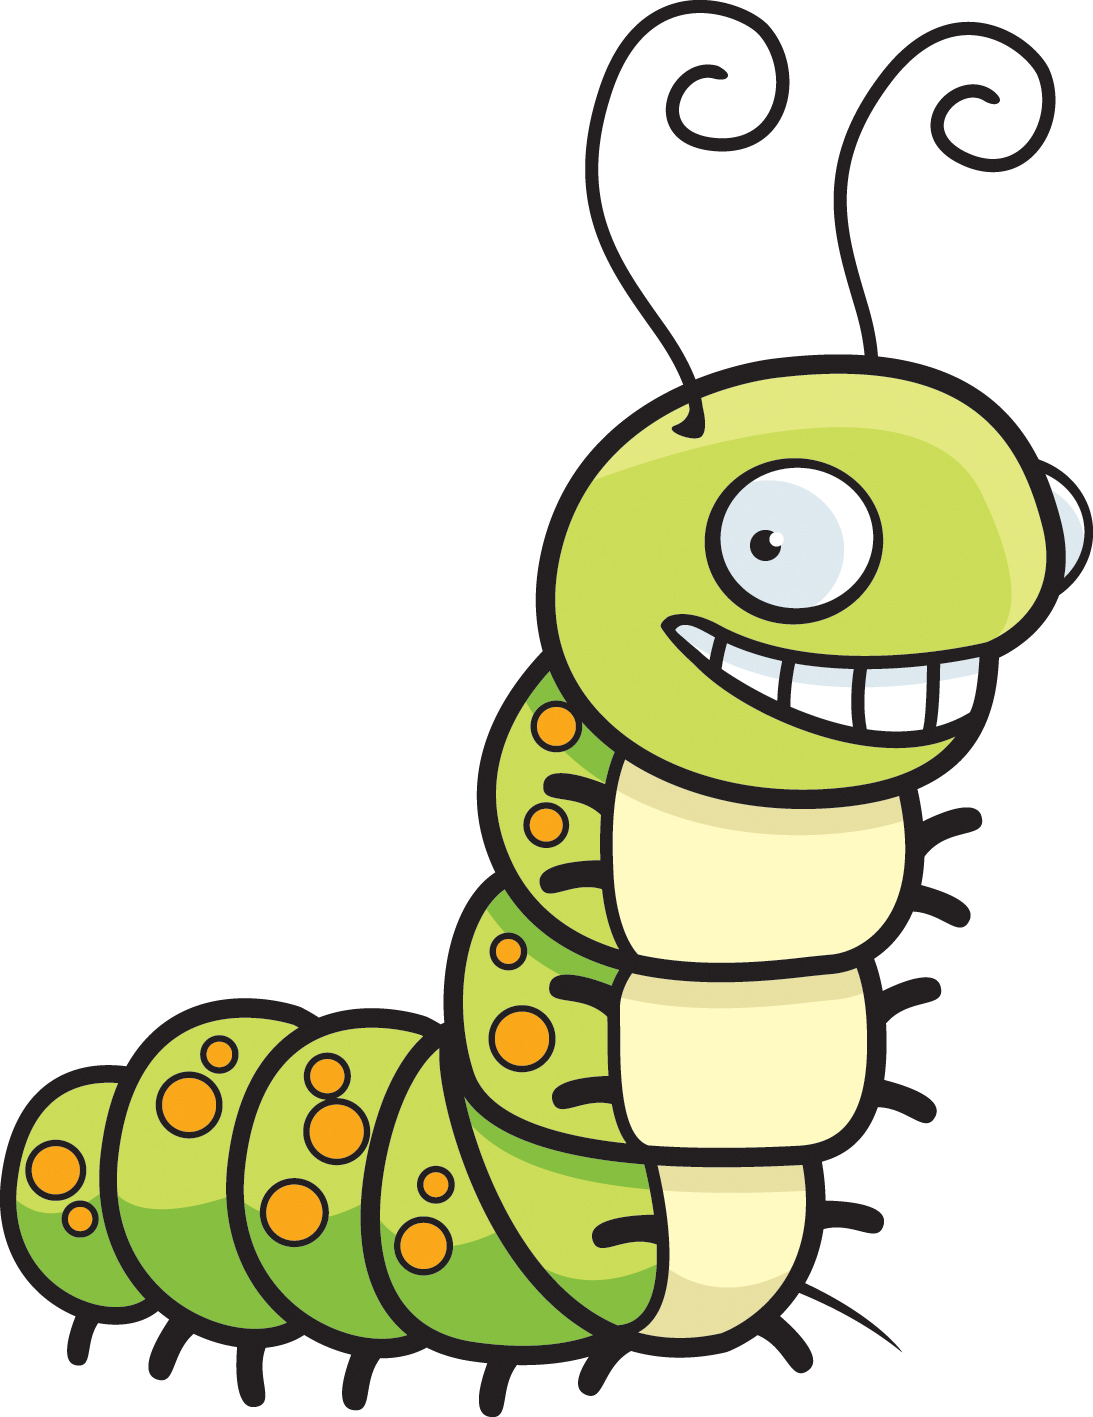 Caterpillar clipart #9, Download drawings